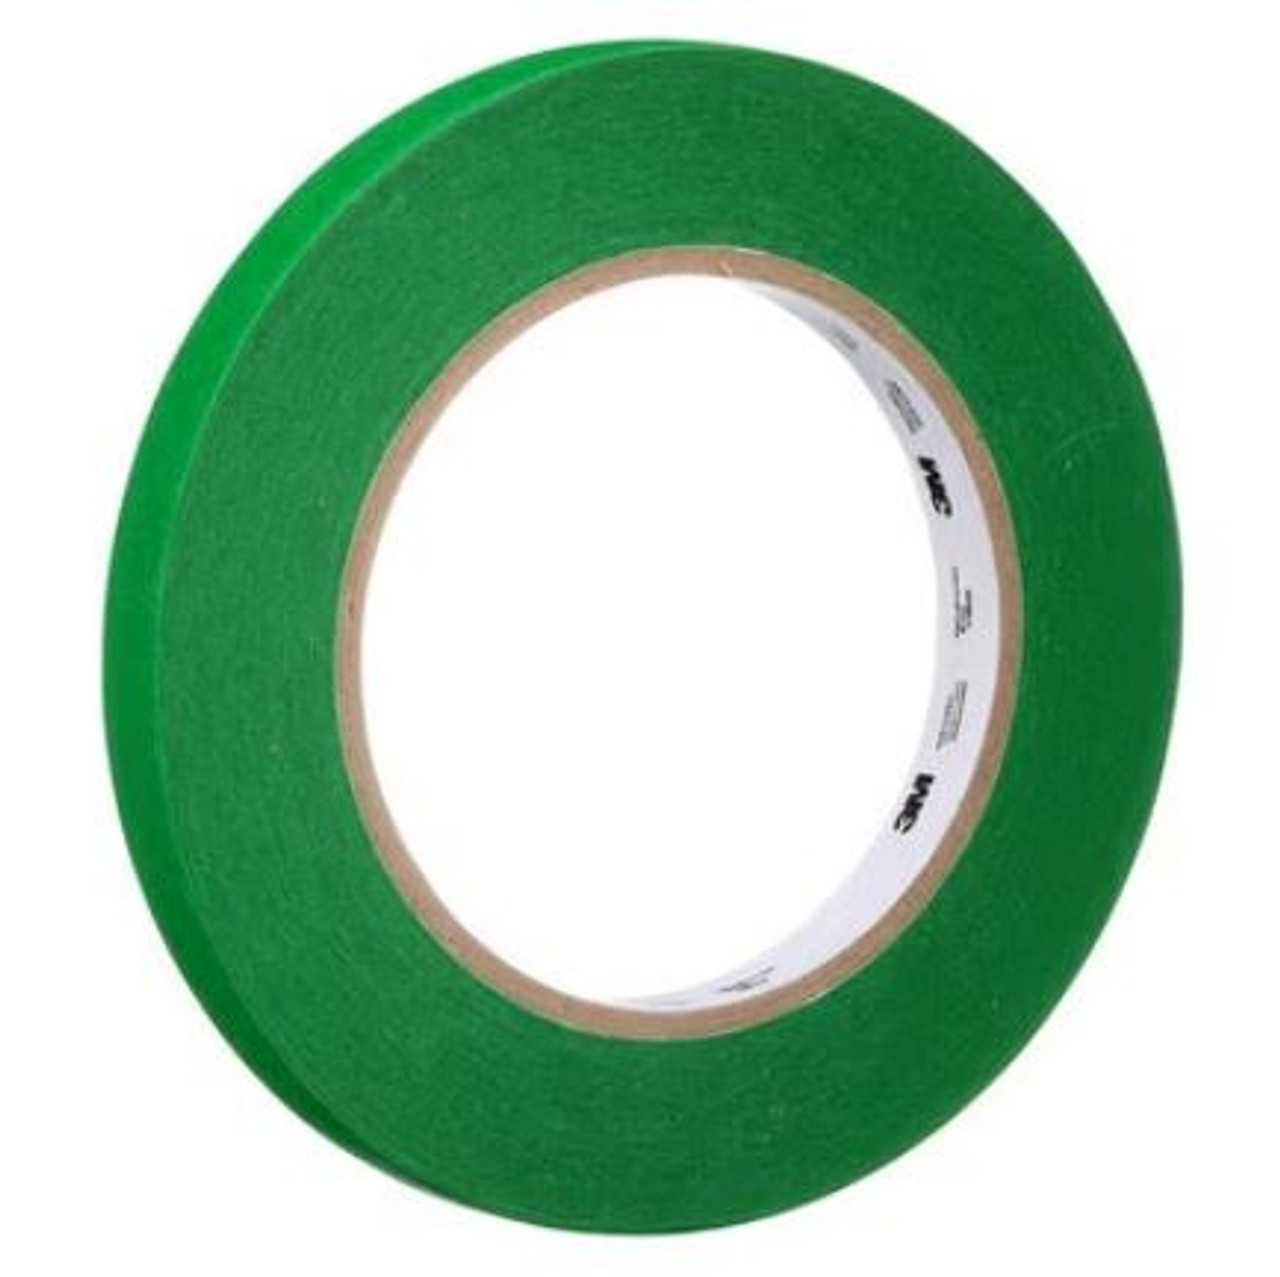 3M™ UV Resistant Green Masking Tape, 12 mm x 55 m